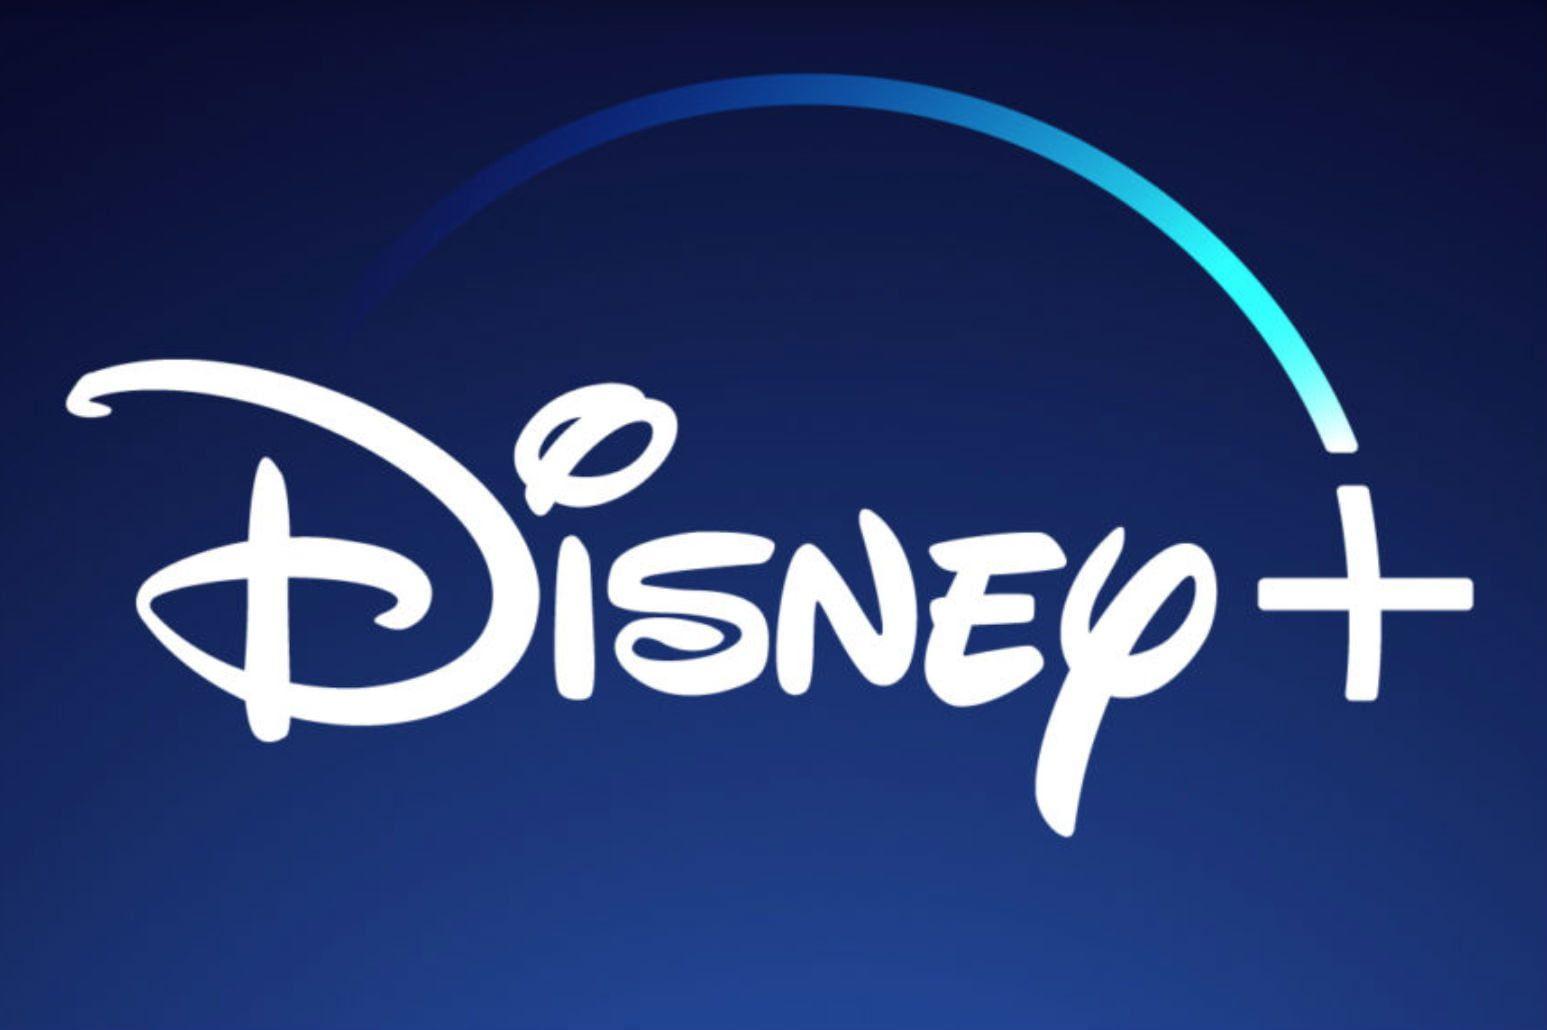 Disney Movie Logo - Disney Plus: Everything We Know About Disney's Streaming Service ...